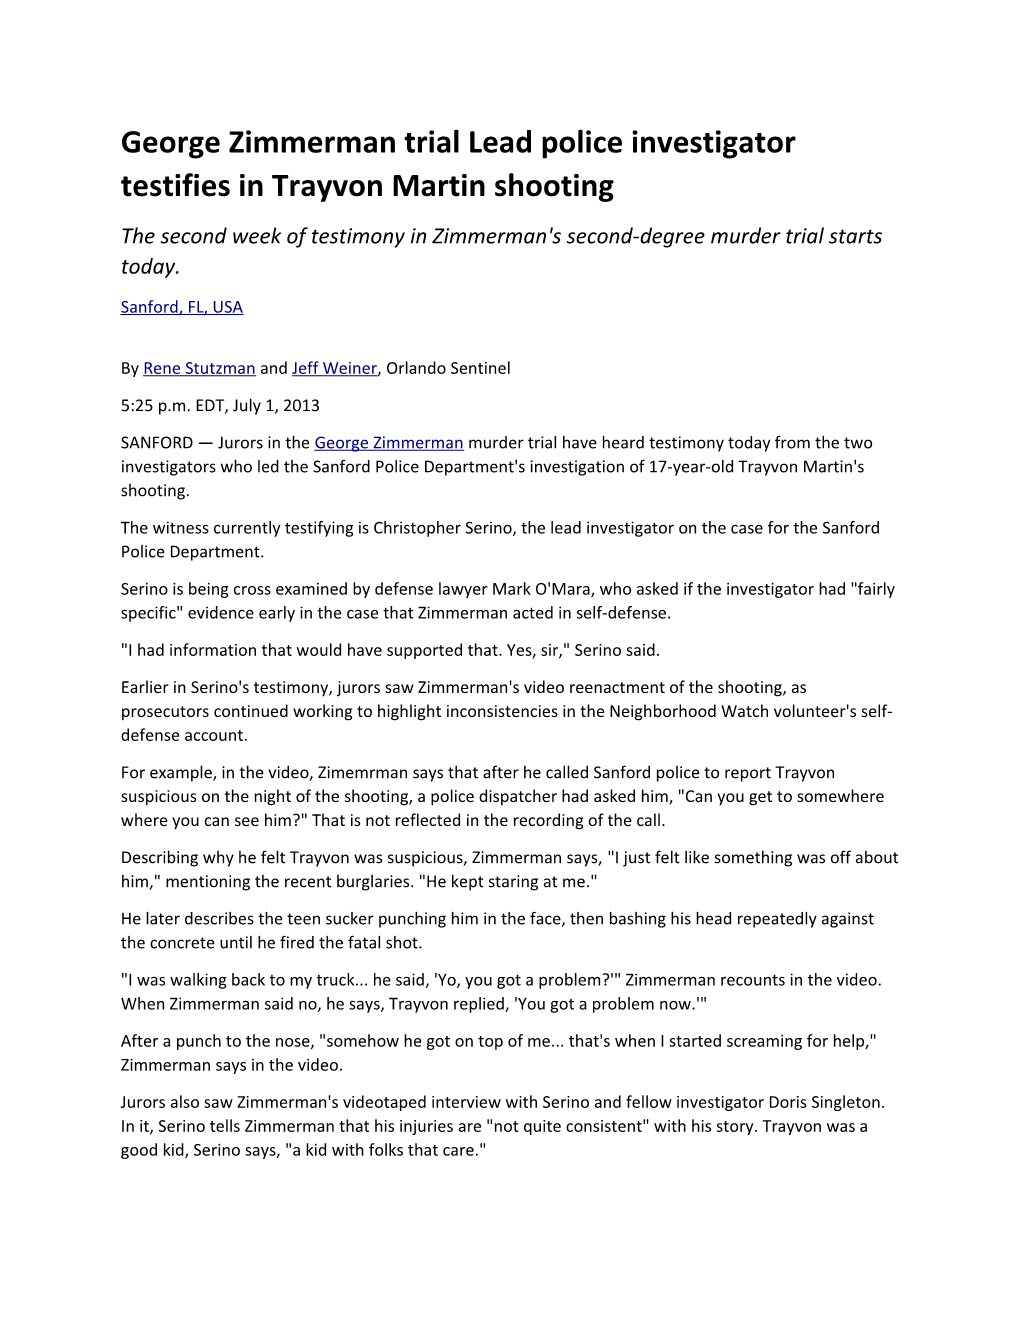 George Zimmerman Trial Lead Police Investigator Testifies in Trayvon Martin Shooting